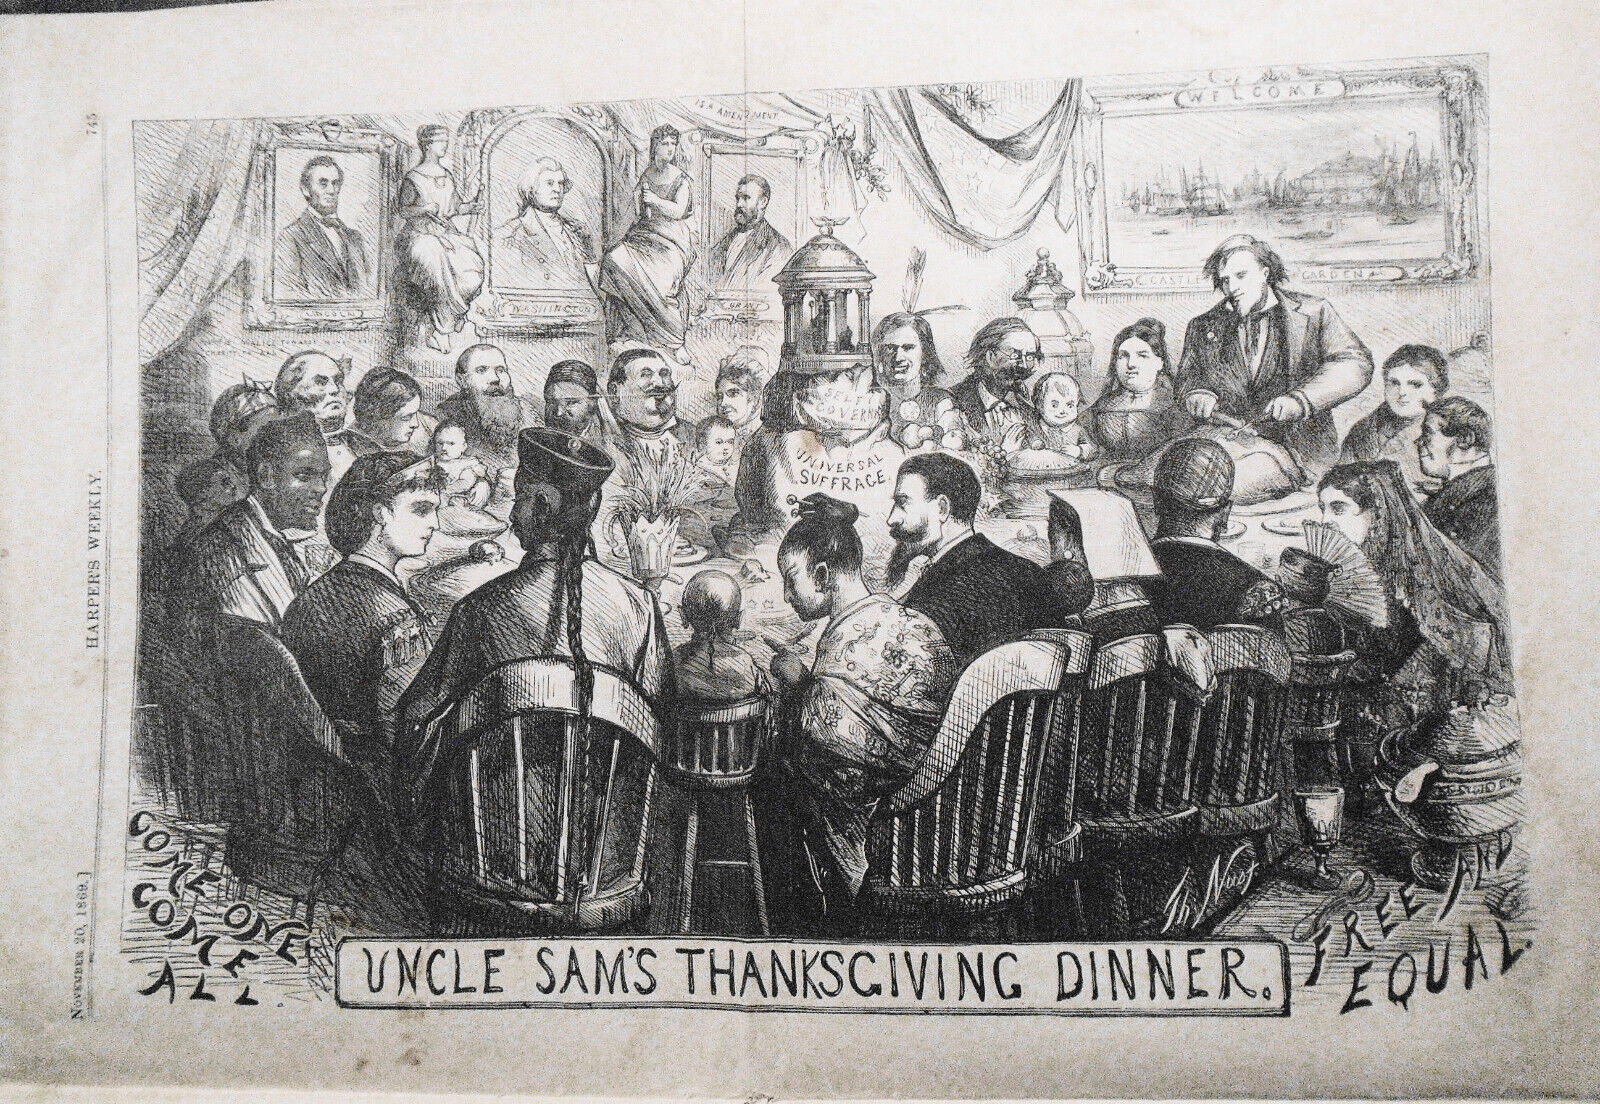 Harper's Weekly November 20, 1869 - Uncle Sam's Thanksgiving Dinner by Nast, etc